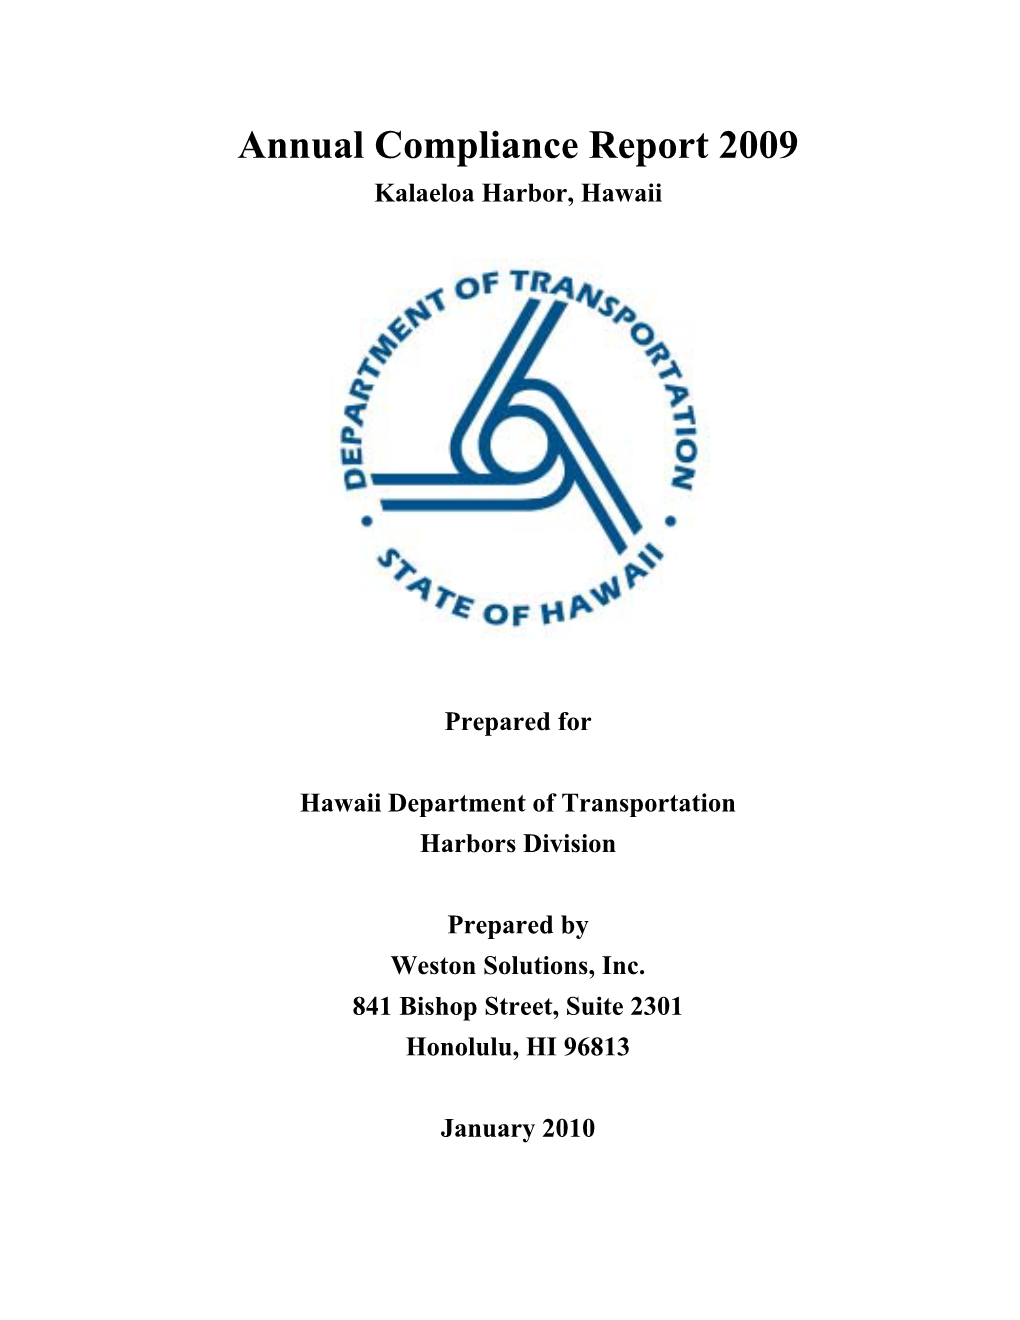 2009 Annual Compliance Report – Kalaeloa